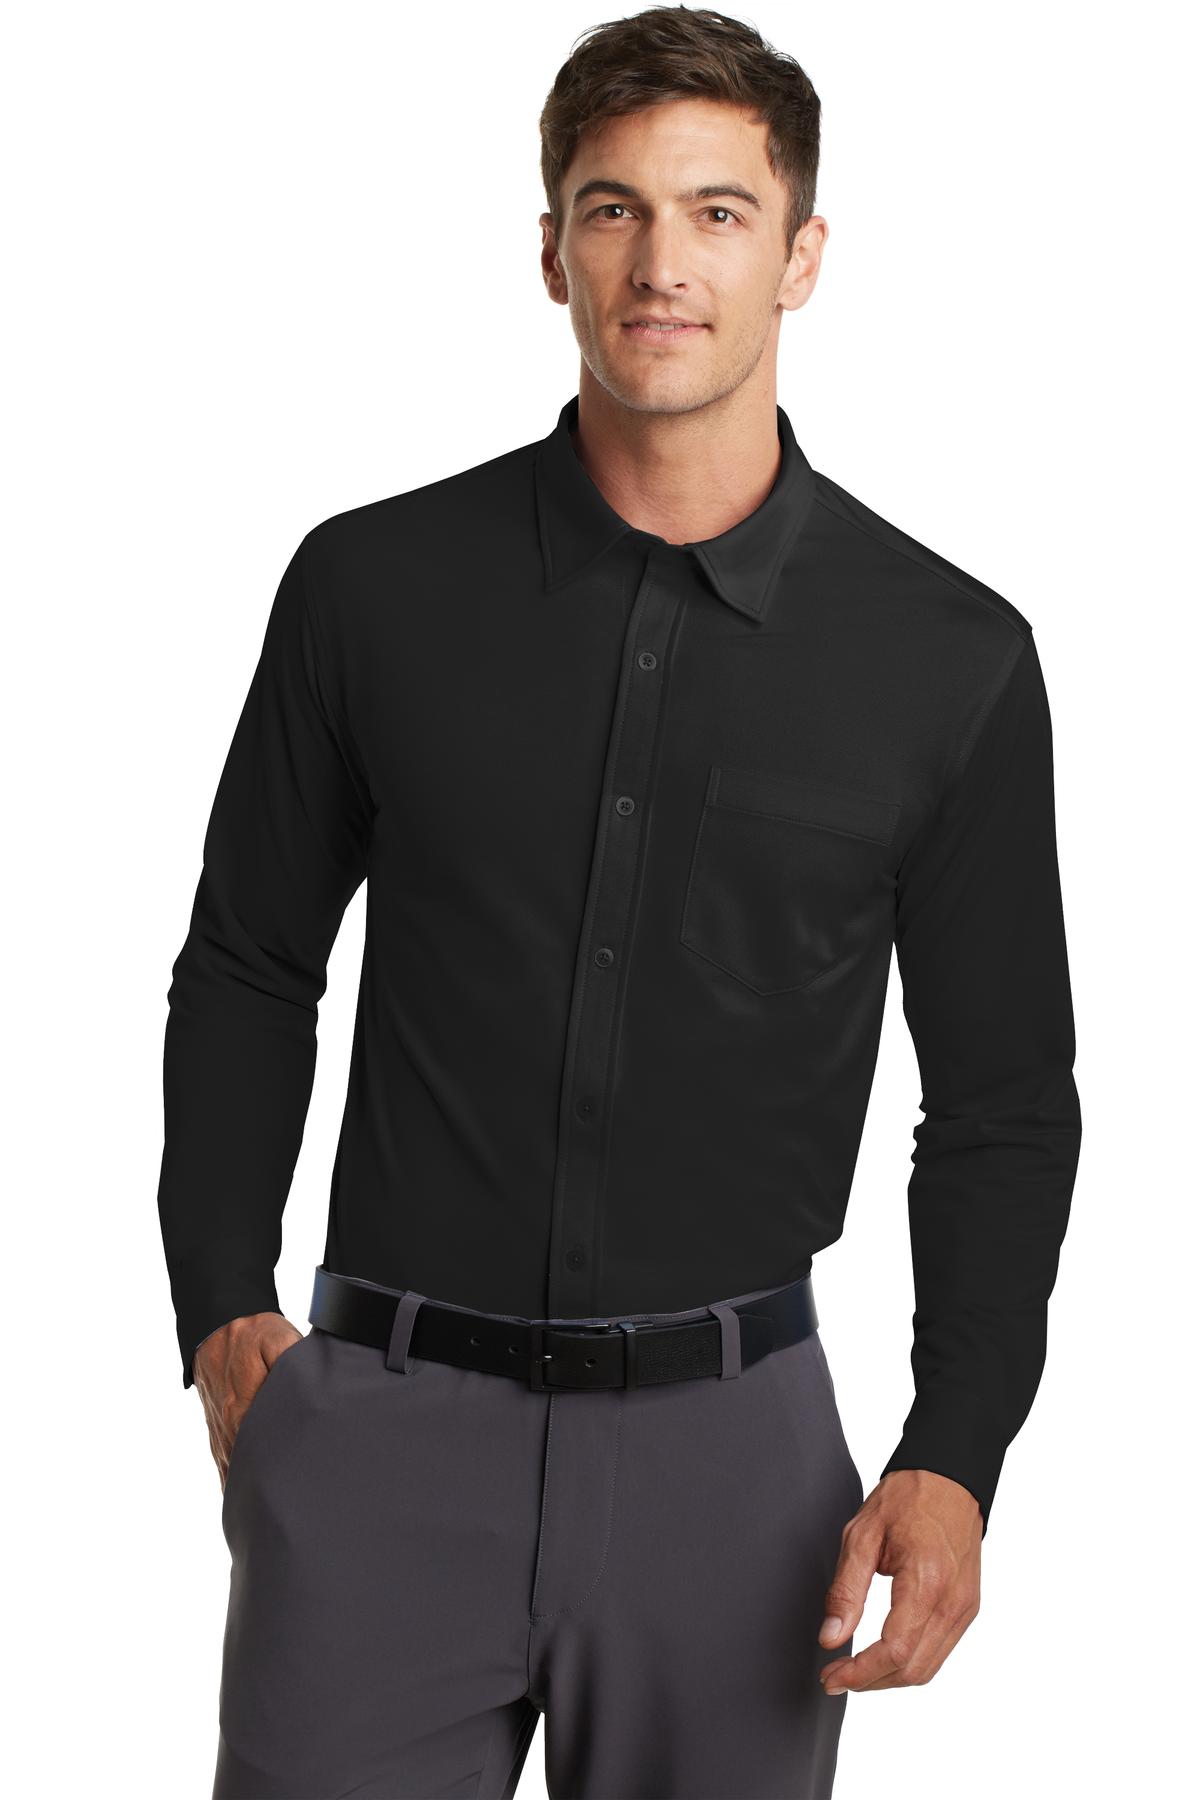 Port Authority K570 Dimension Knit Dress Shirt - Black - S